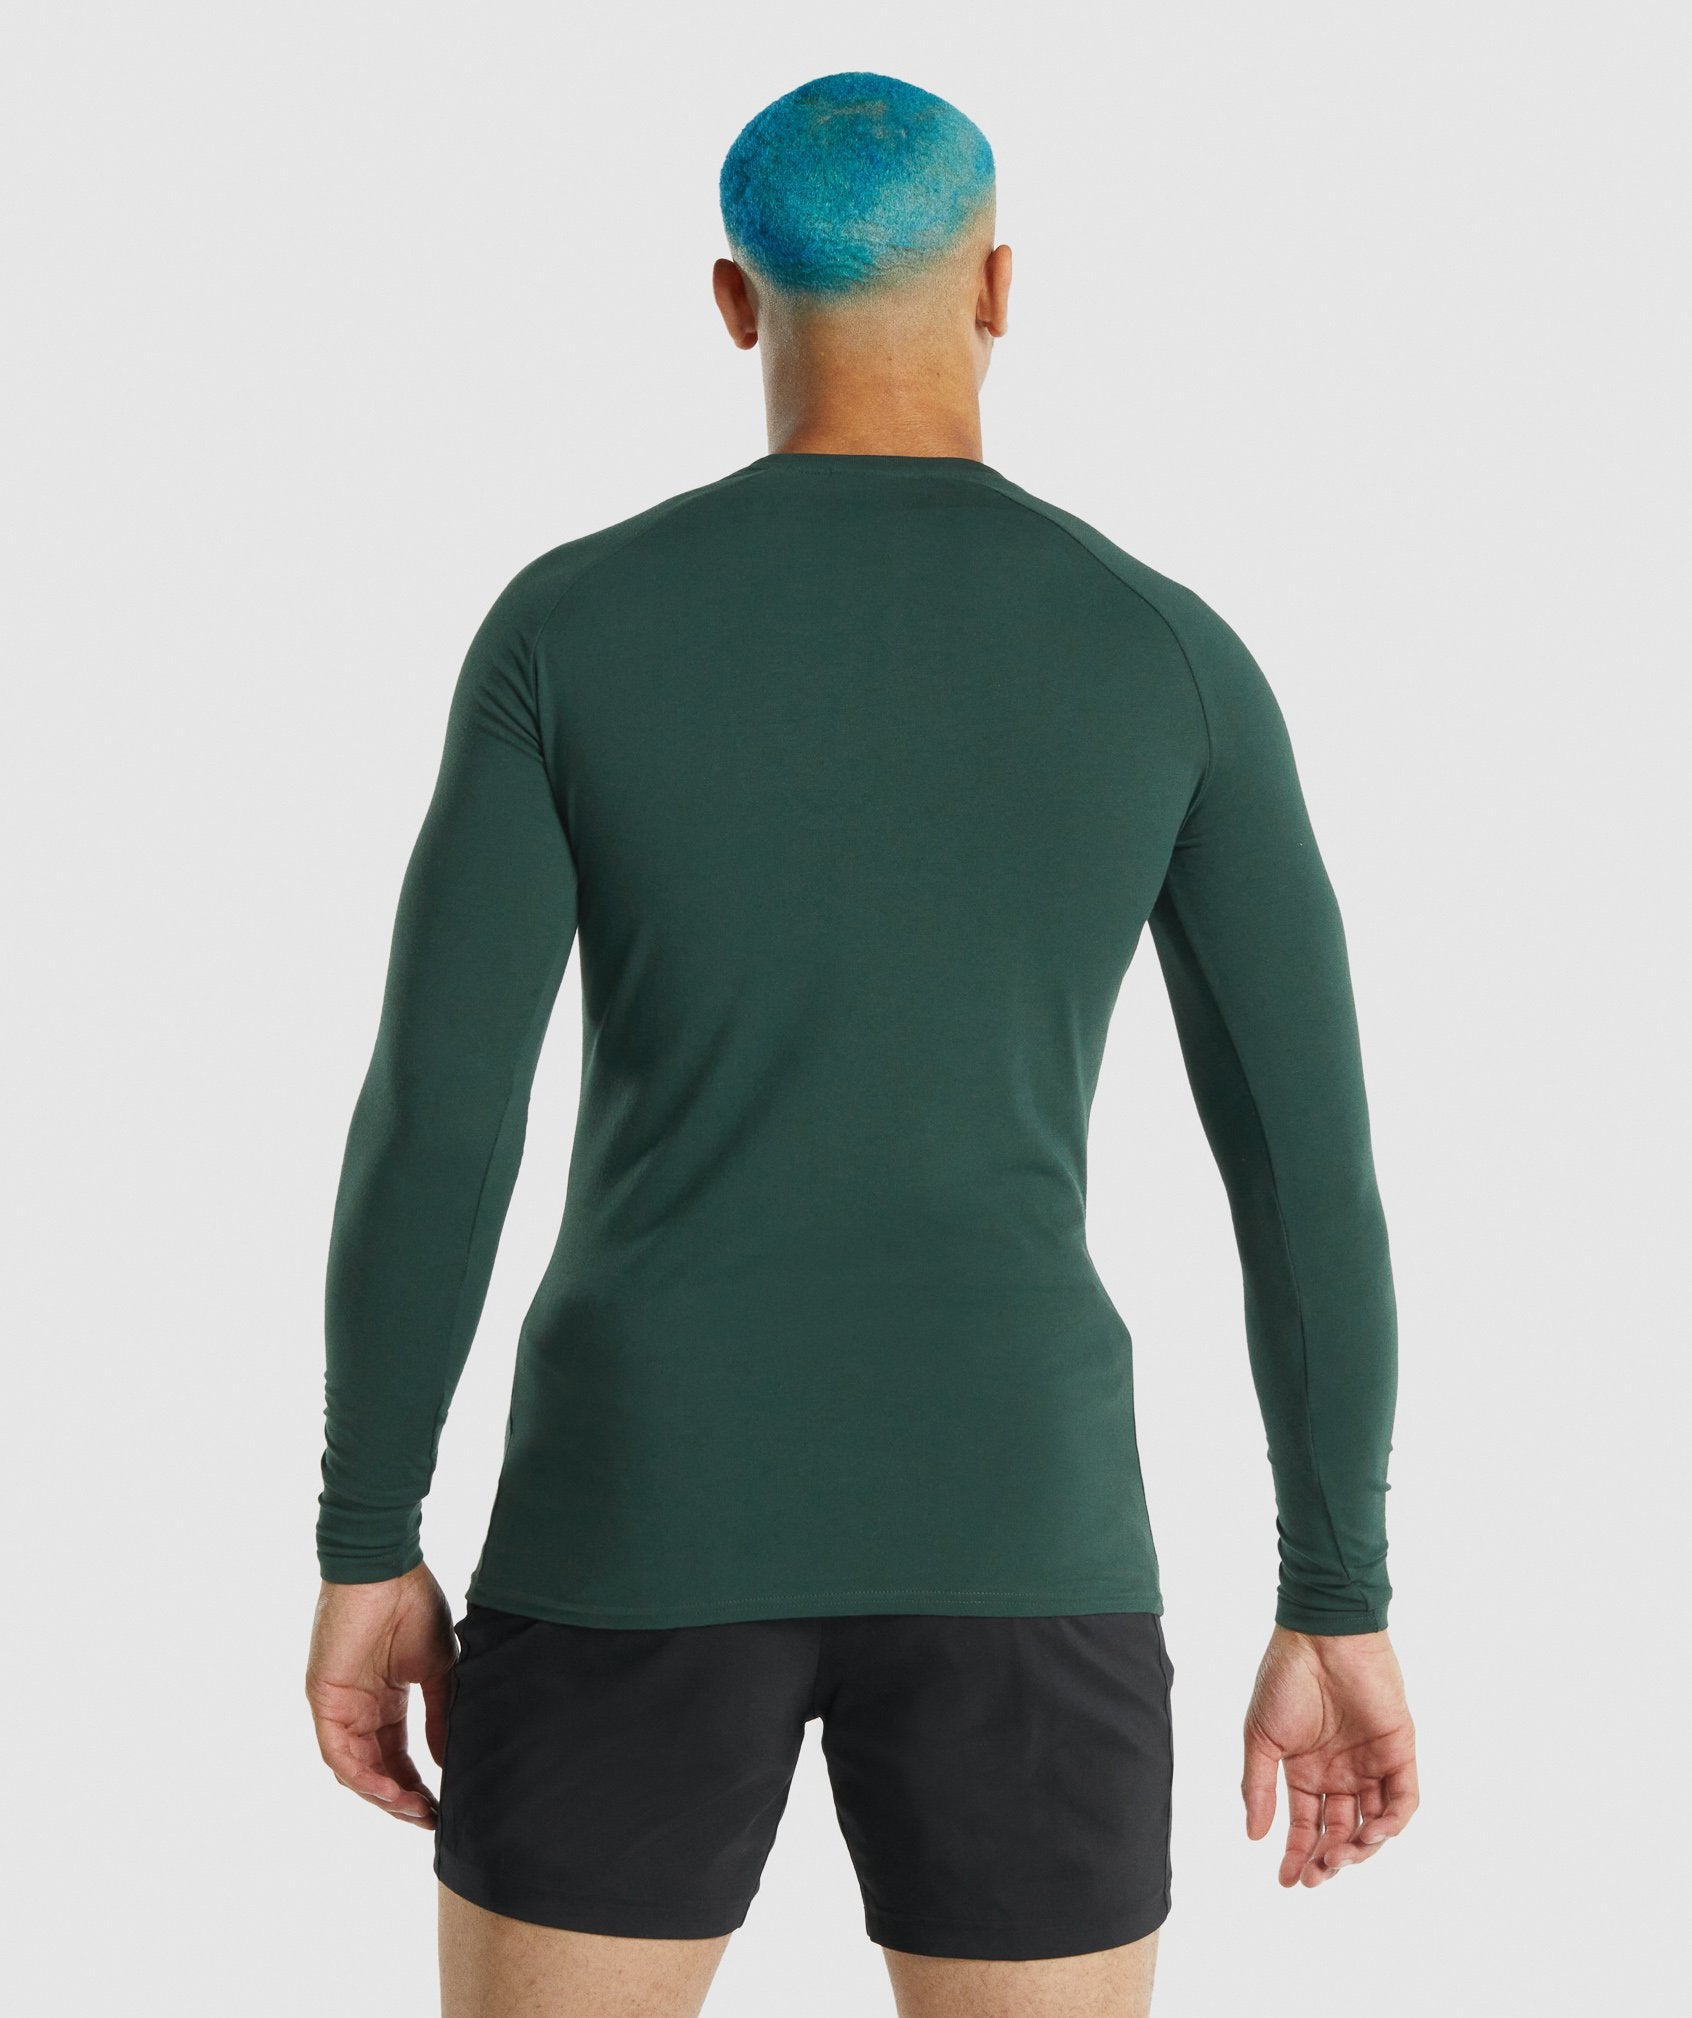 Apollo Long Sleeve T-Shirt in Dark Green